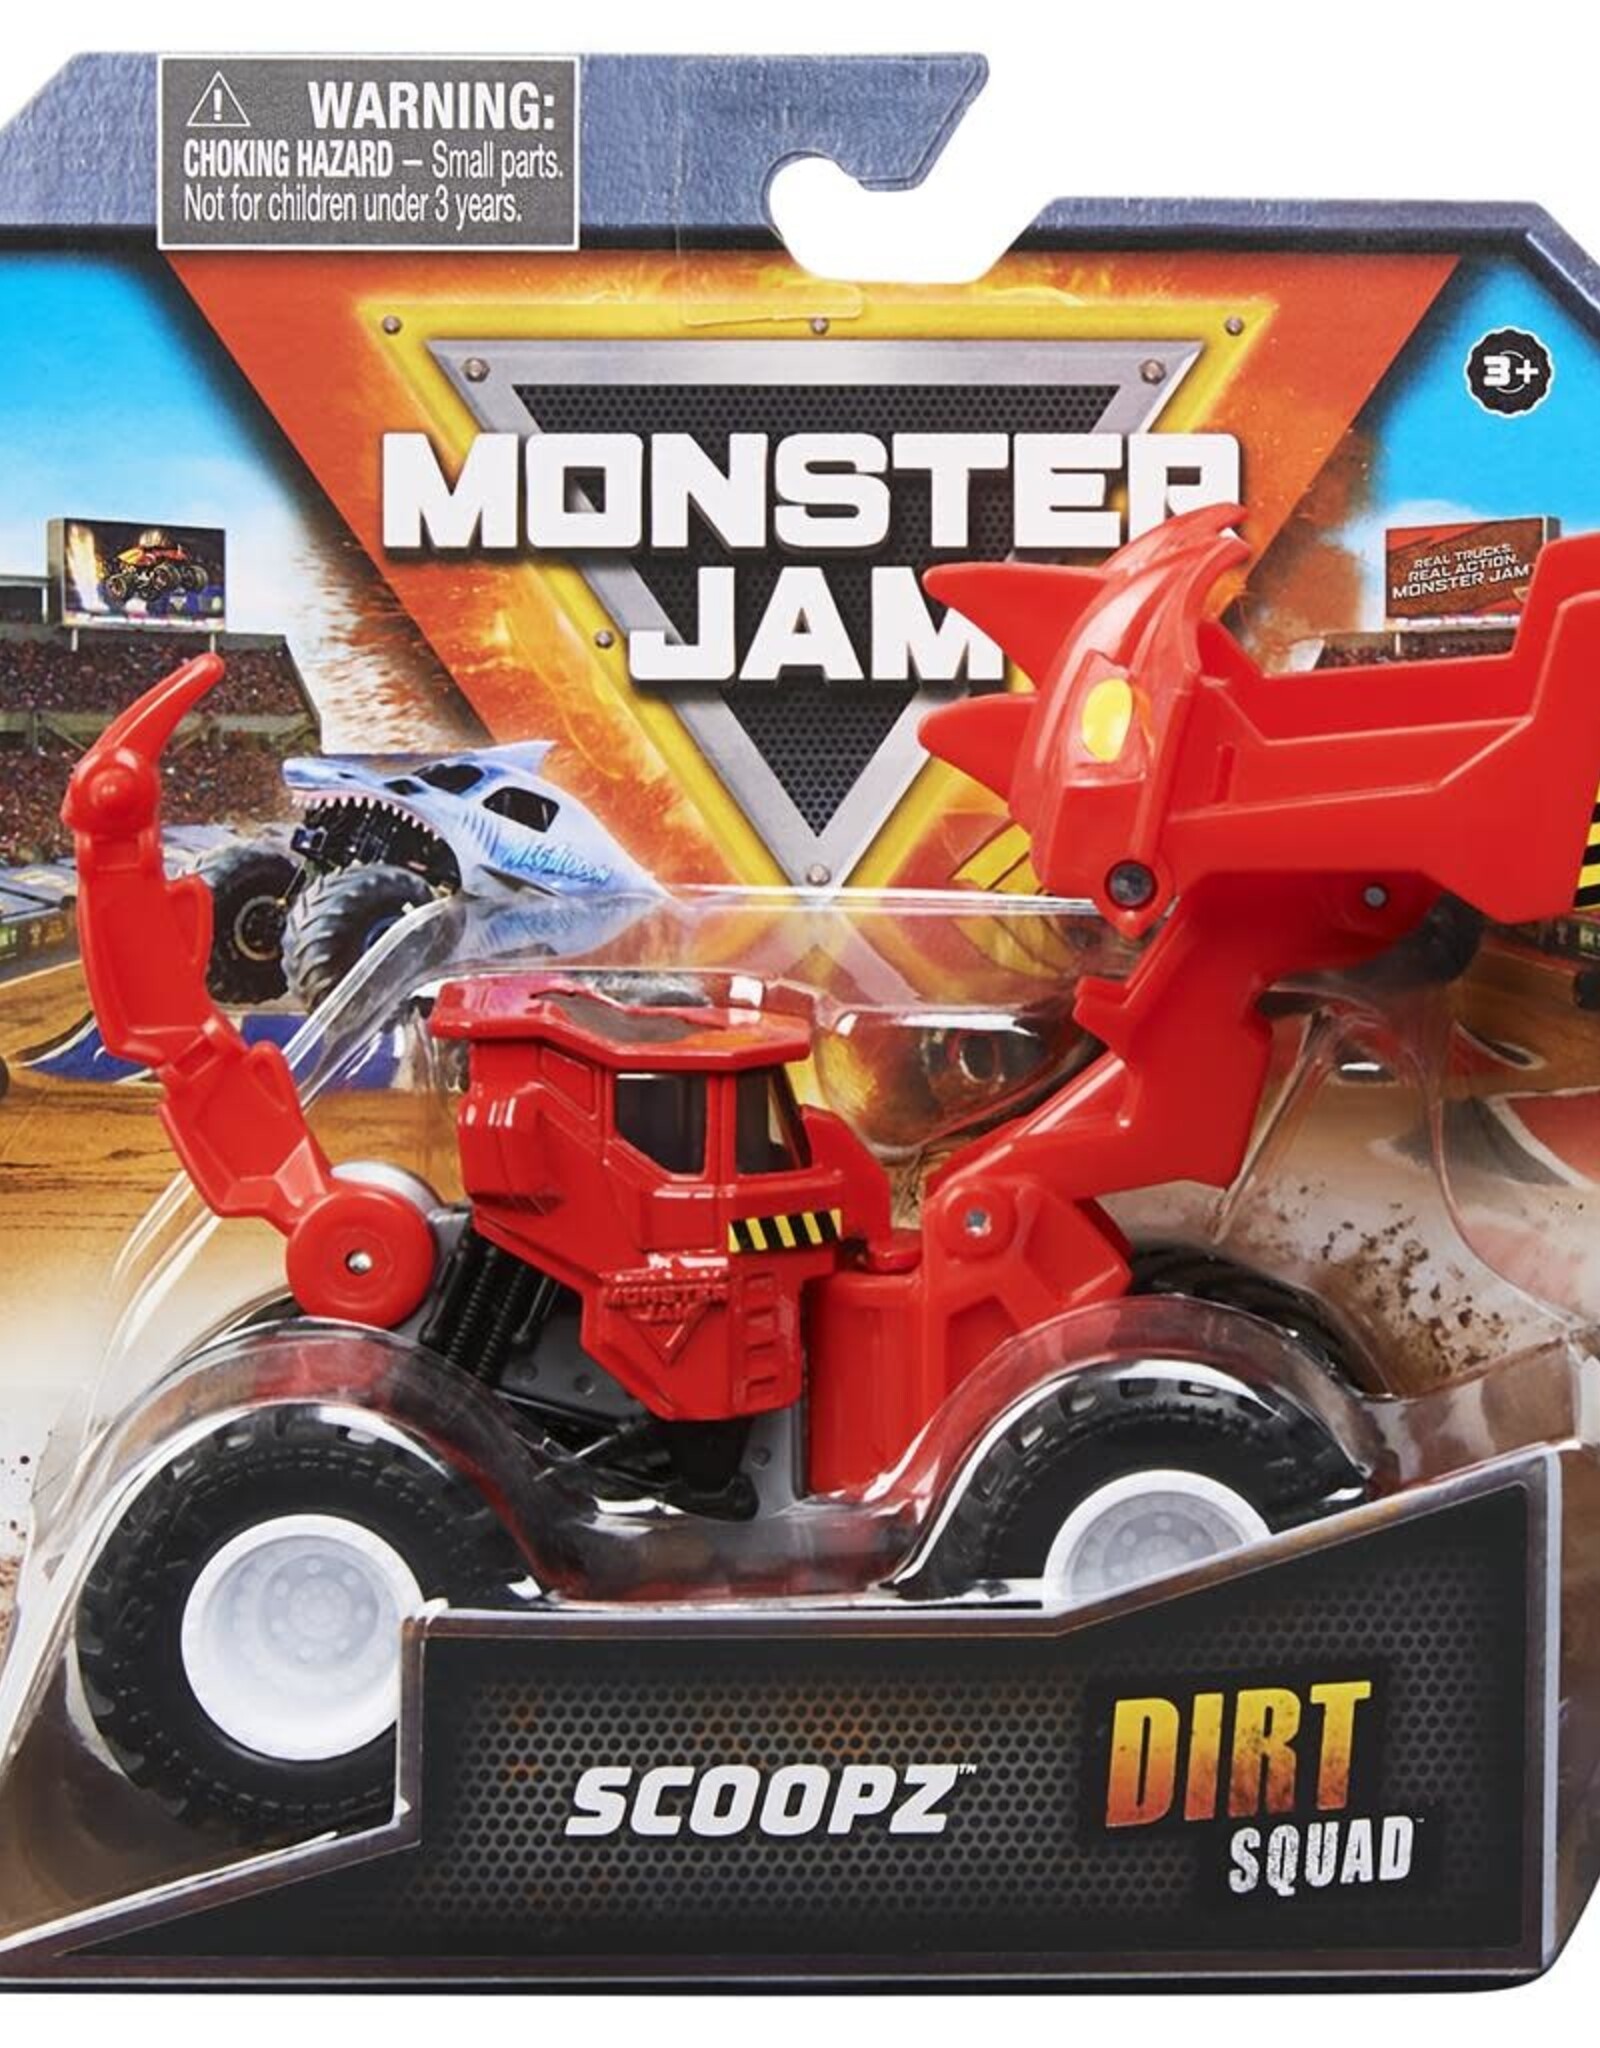 Gund/Spinmaster Monster Jam 1:64 Scale Die-Cast Dirt Squad